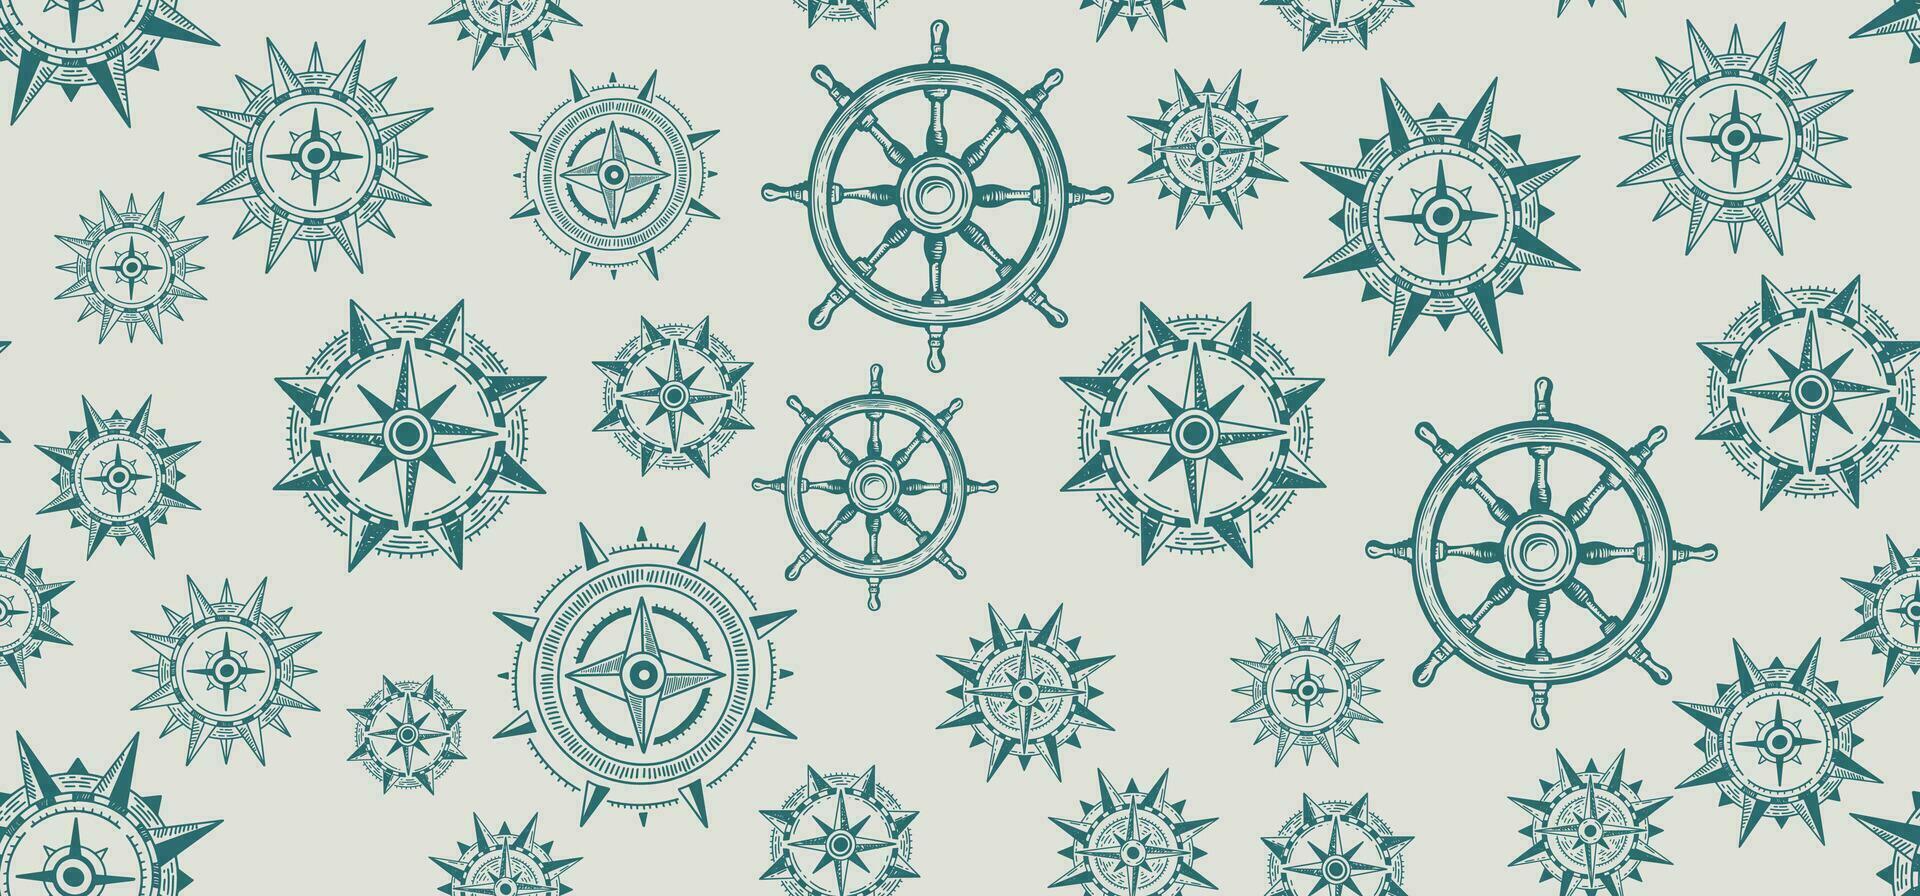 Compass Wind rose, Ship wheel, pattern, hand drawn Illustration. vector